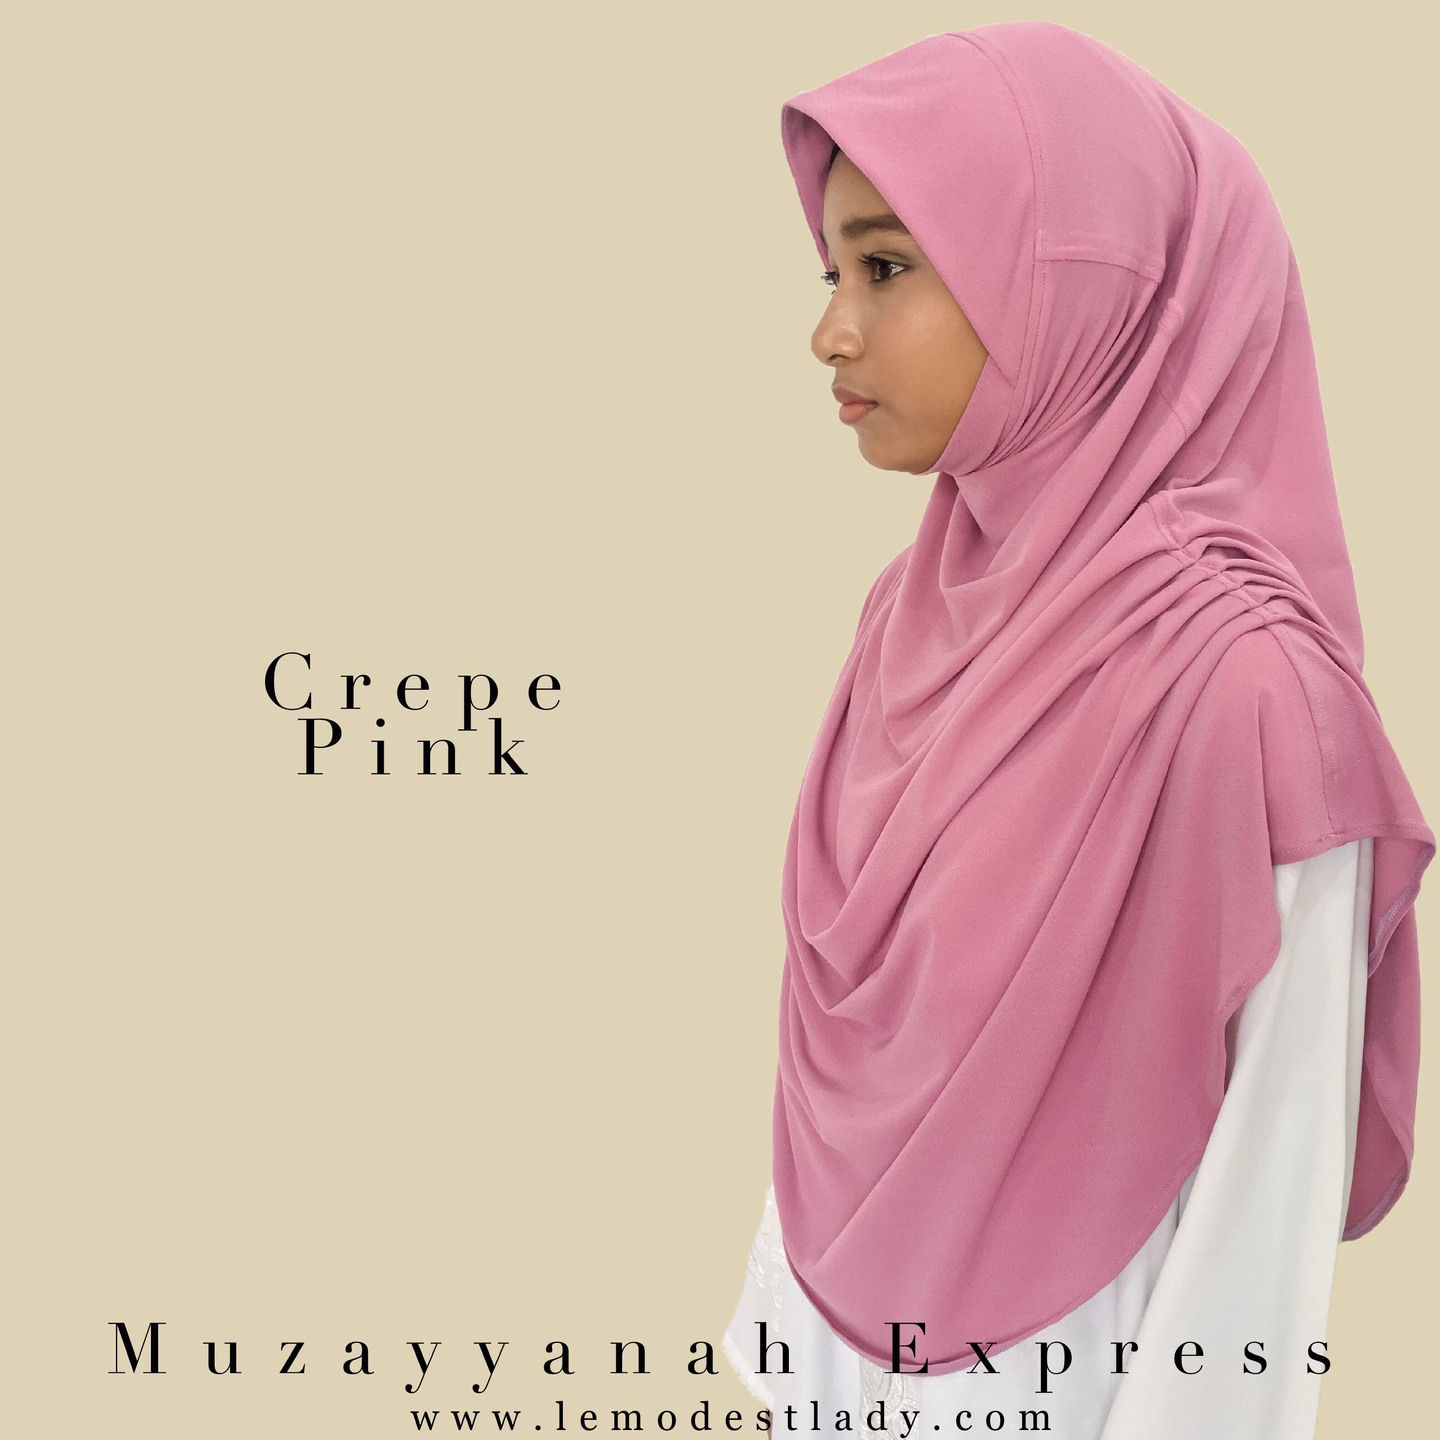 Muzayyanah Express - Crepe Pink